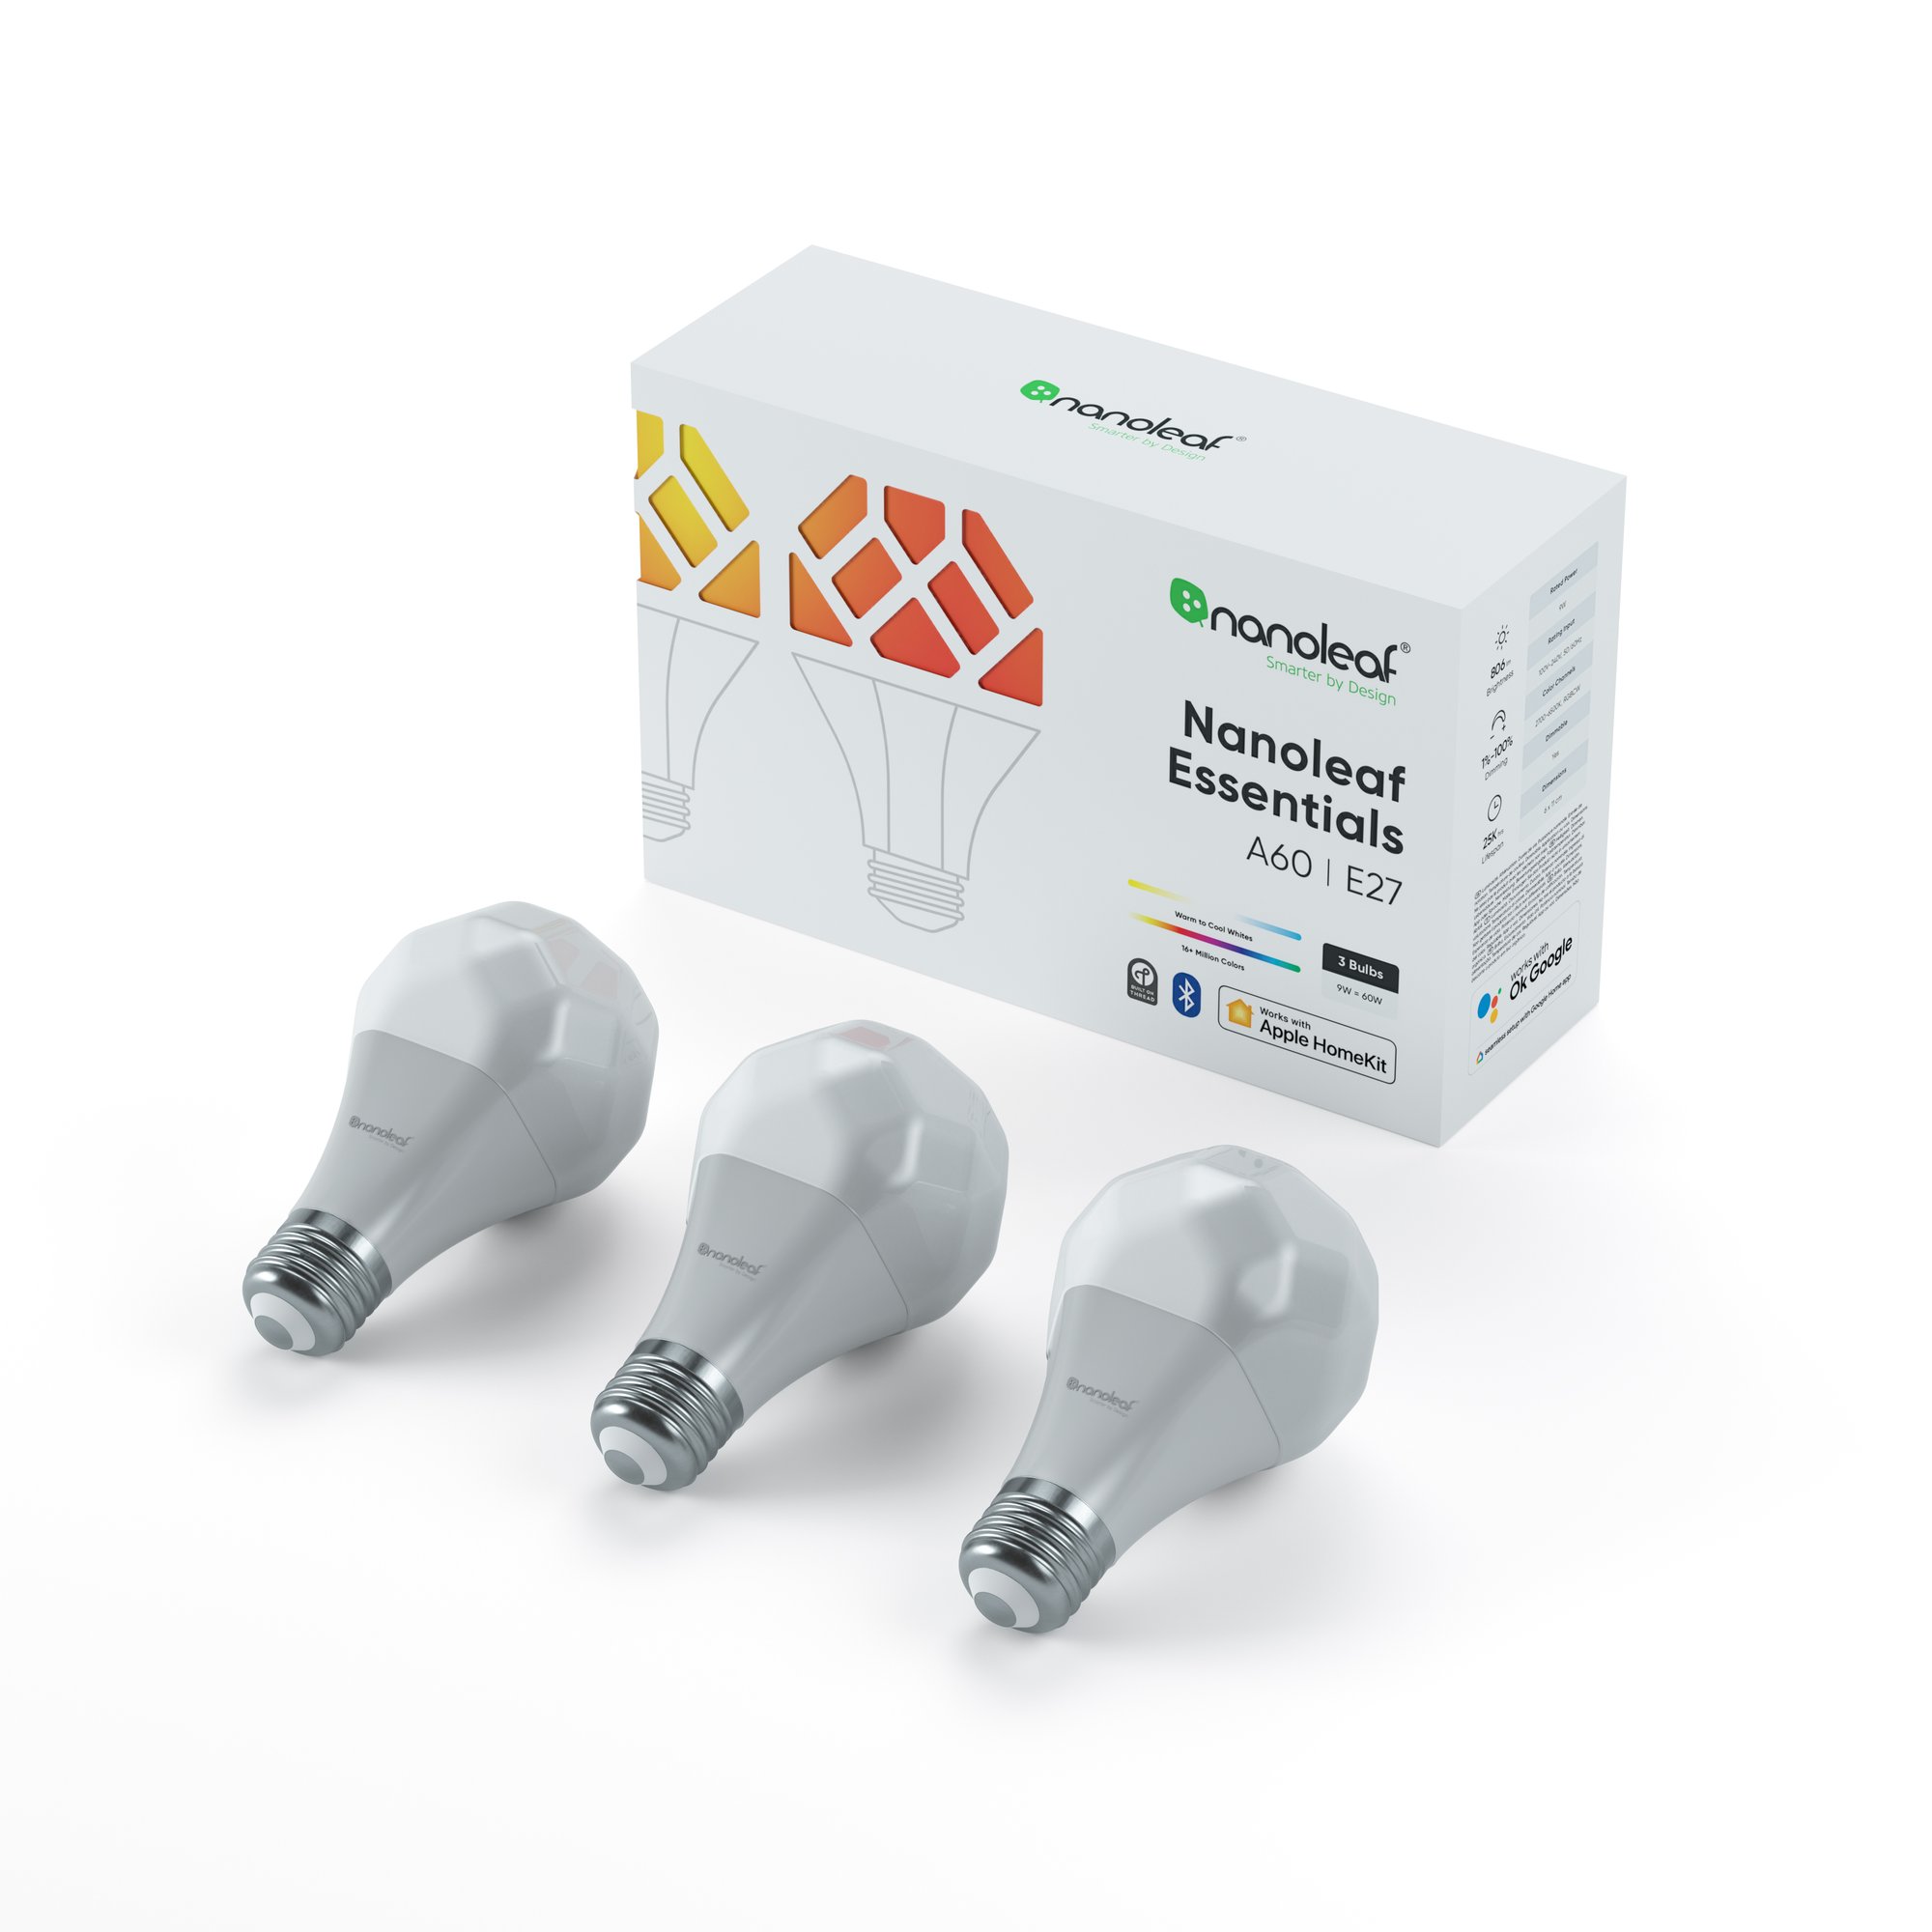 Nanoleaf essentials E27 Bulb triple pack